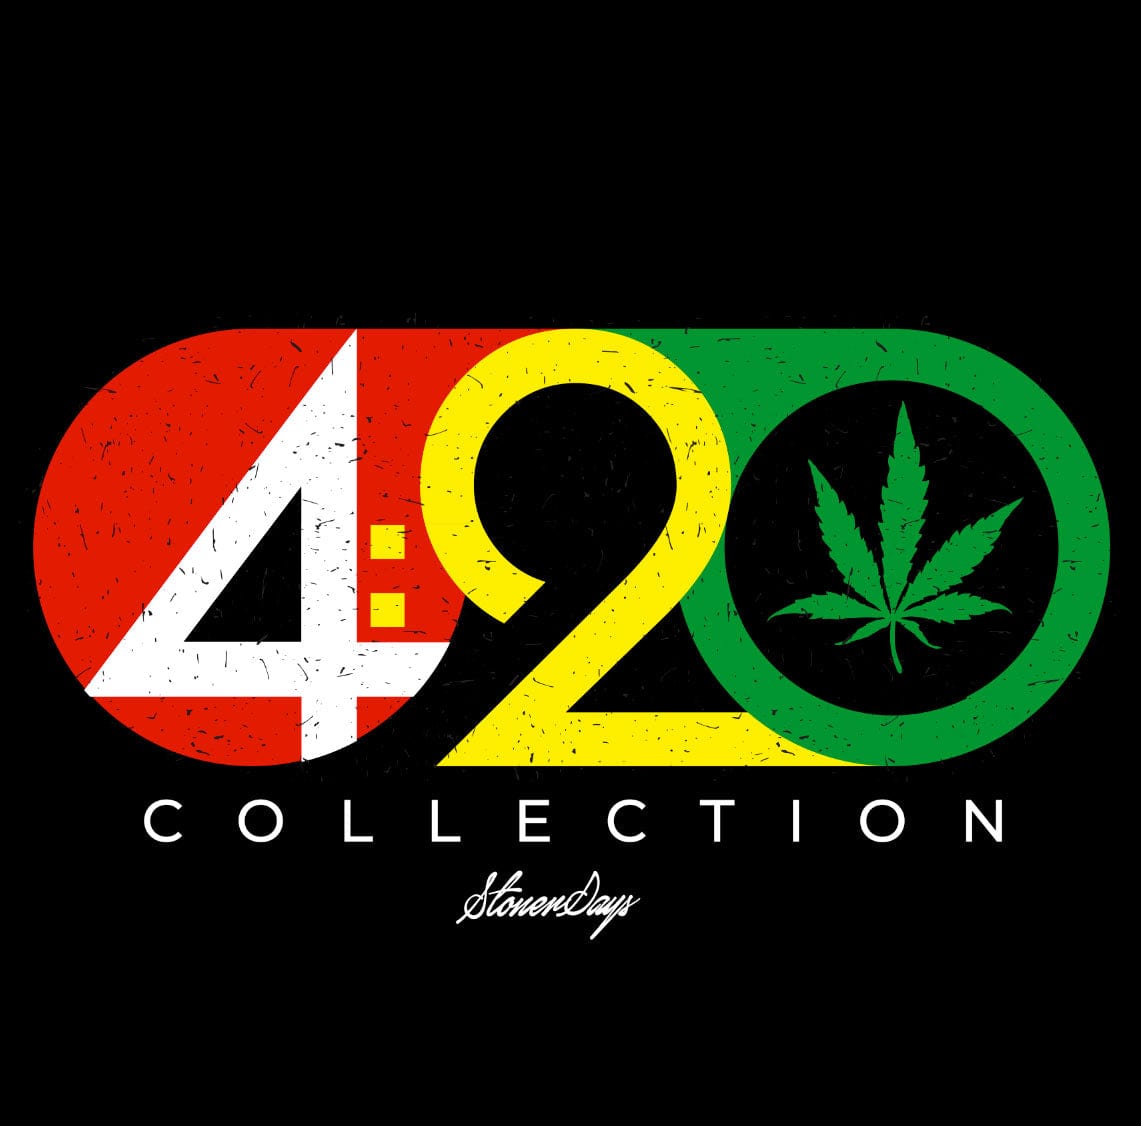 StonerDays 420 Collection Long Sleeve